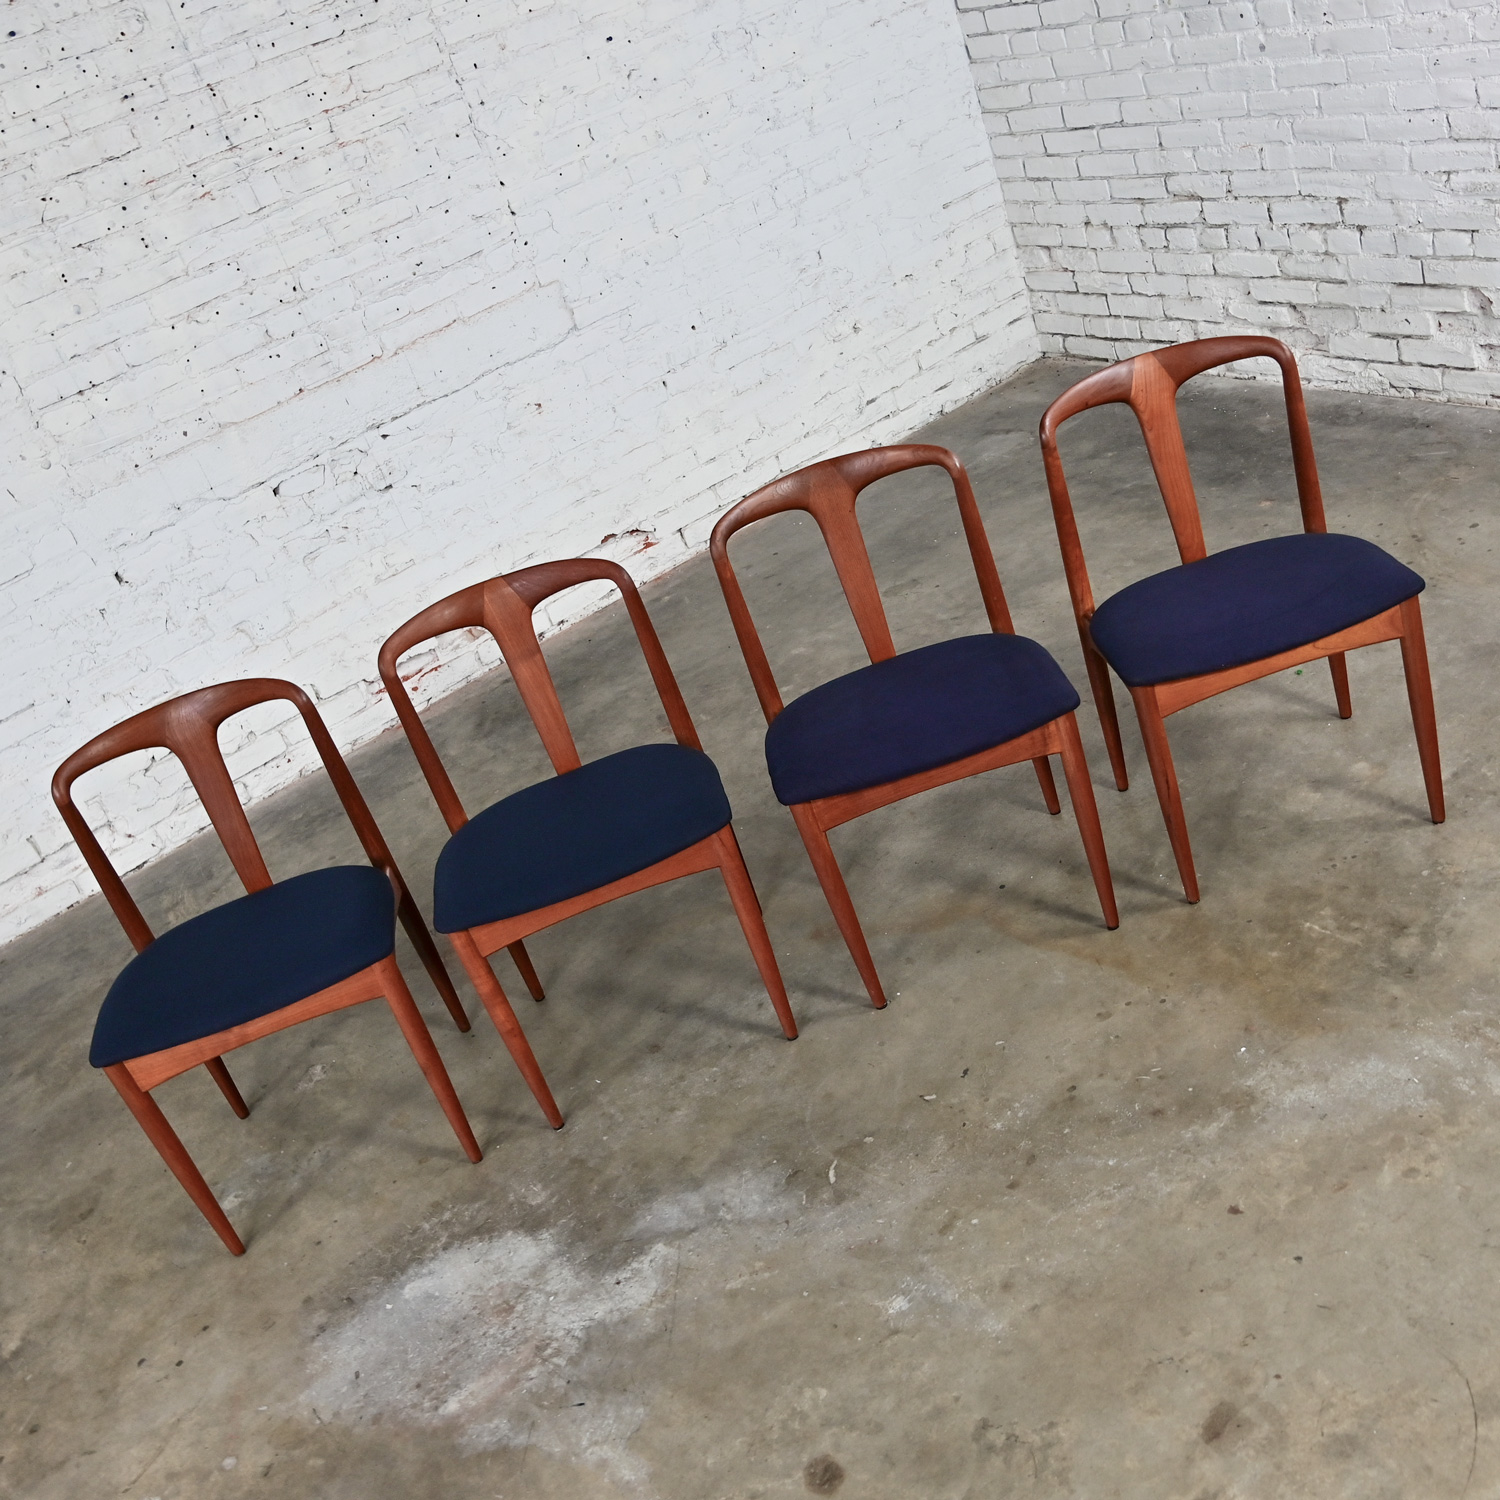 1960’s Mid Century Scandinavian Modern Teak Dining Chairs Attributed to Johannes Andersen Juliane Chair set of 4